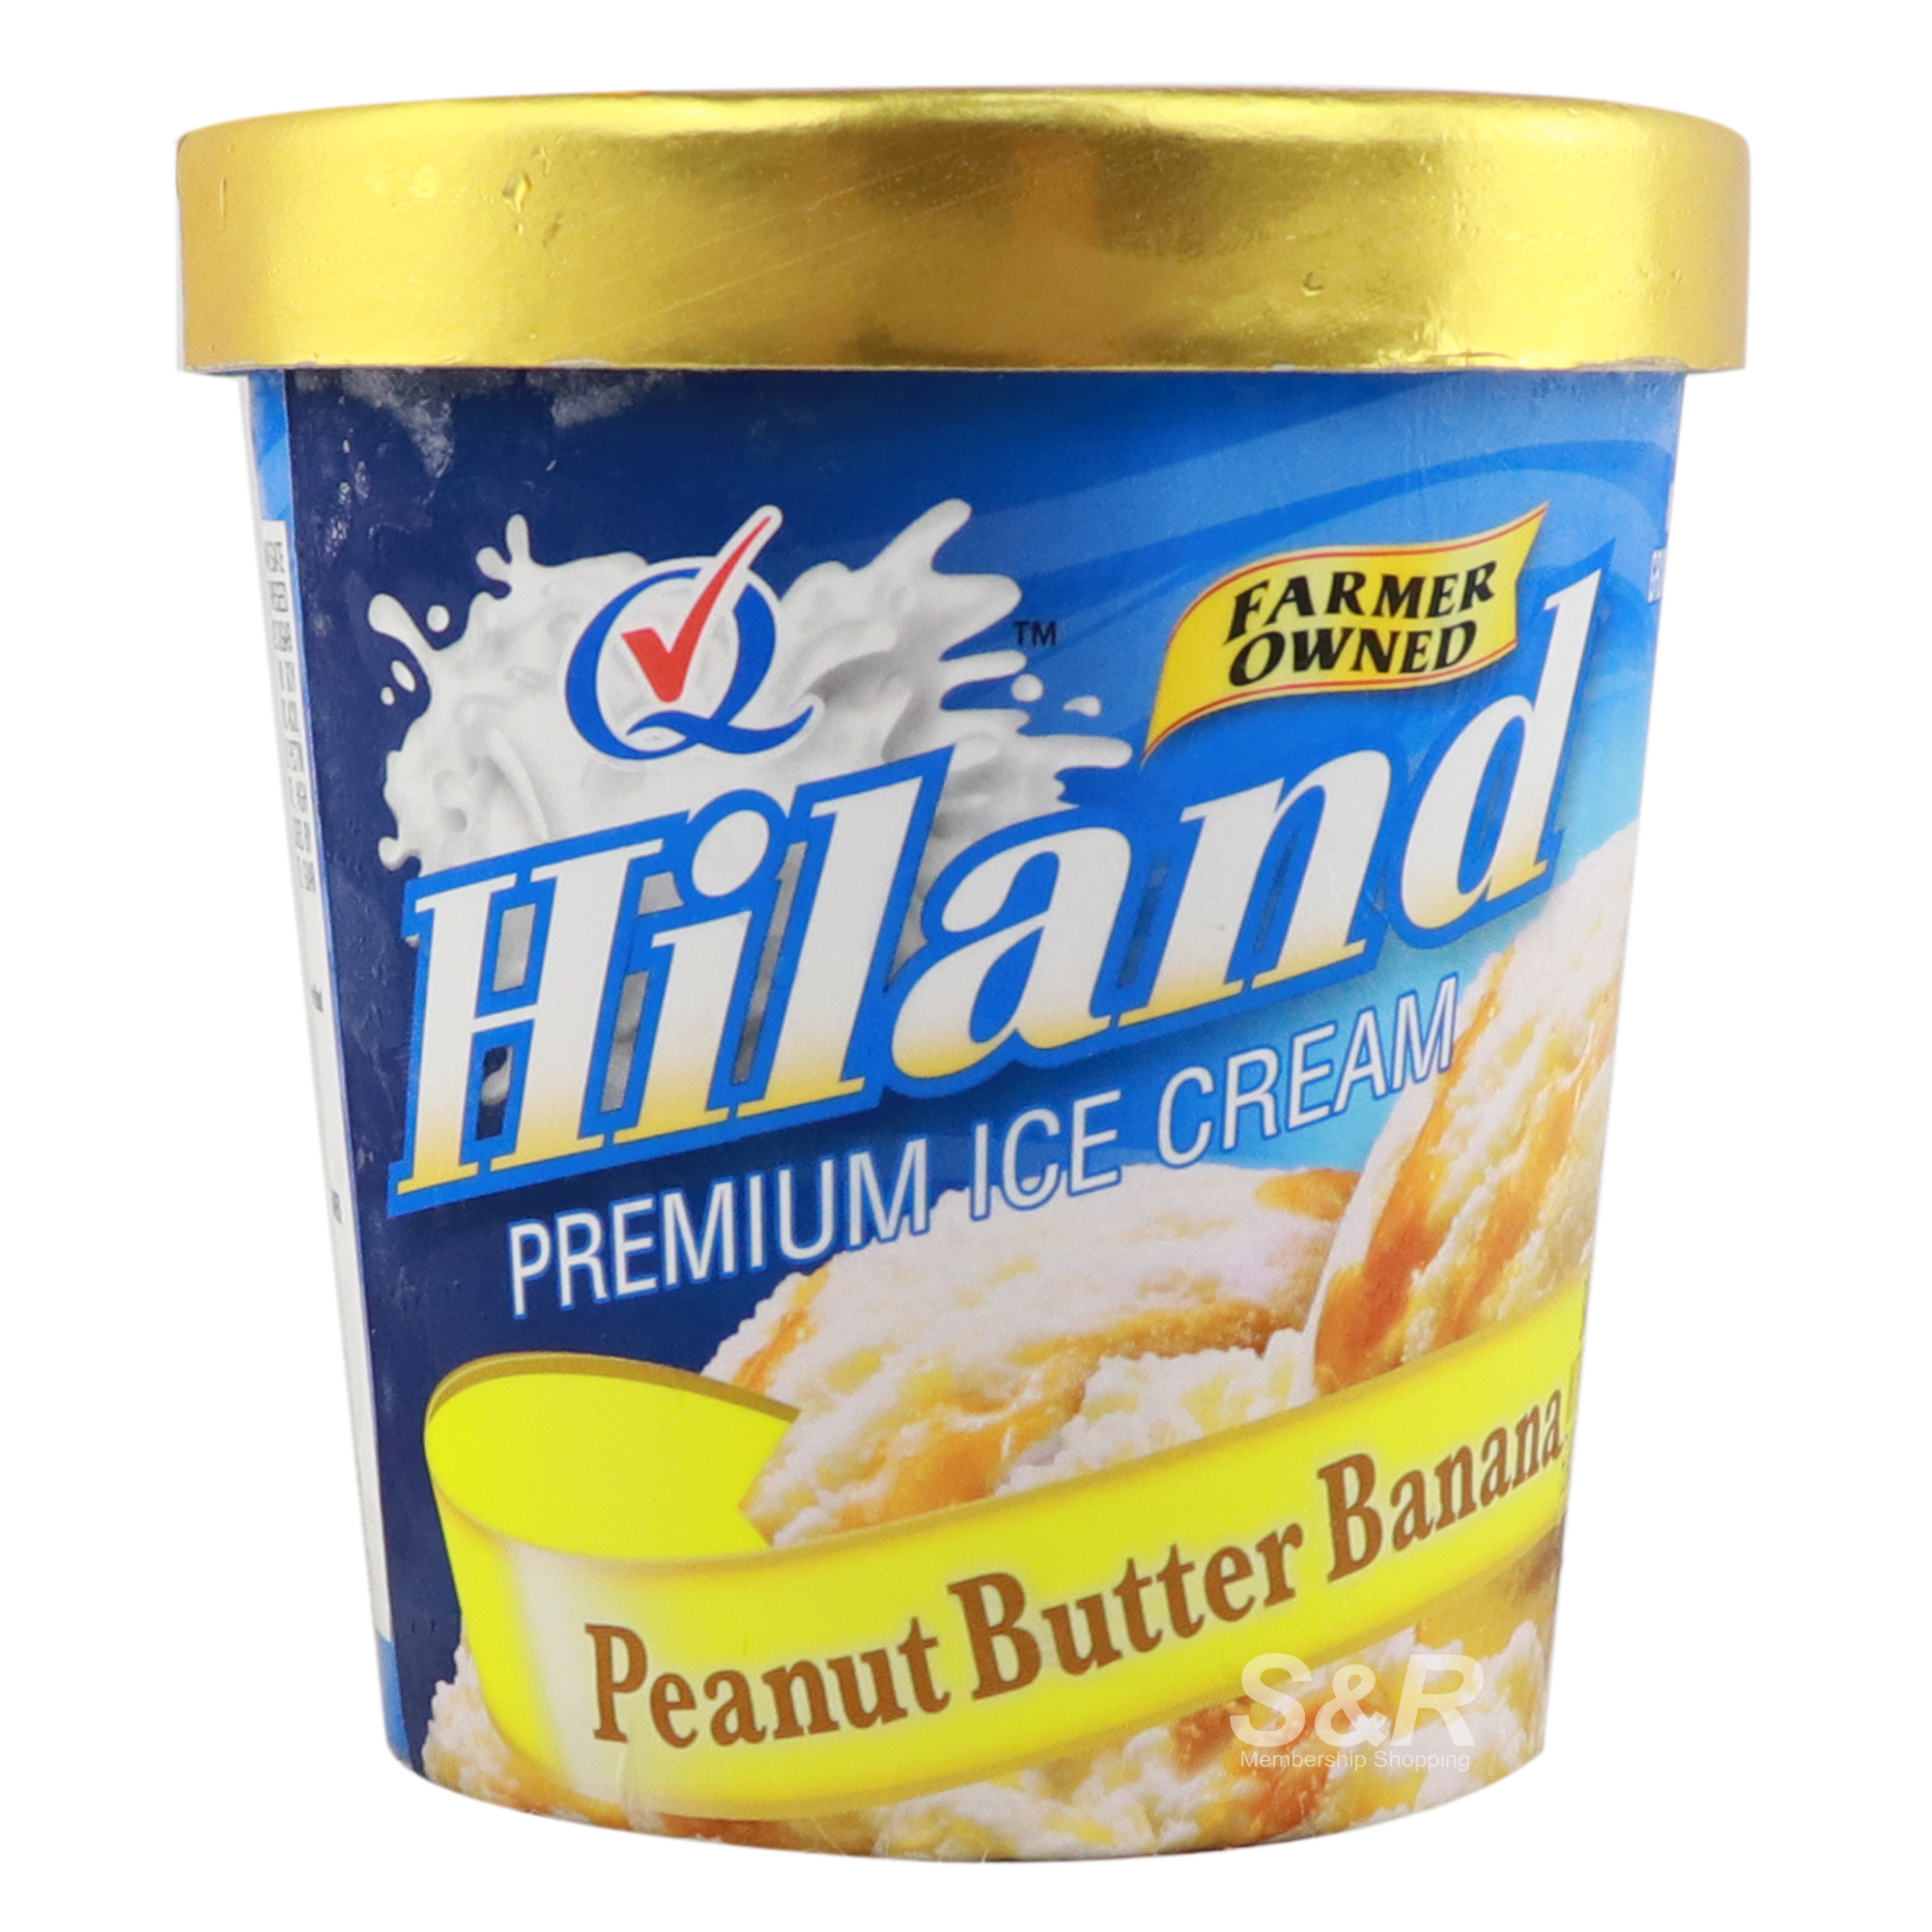 Hiland Premium Peanut Butter and Banana Ice Cream 473mL